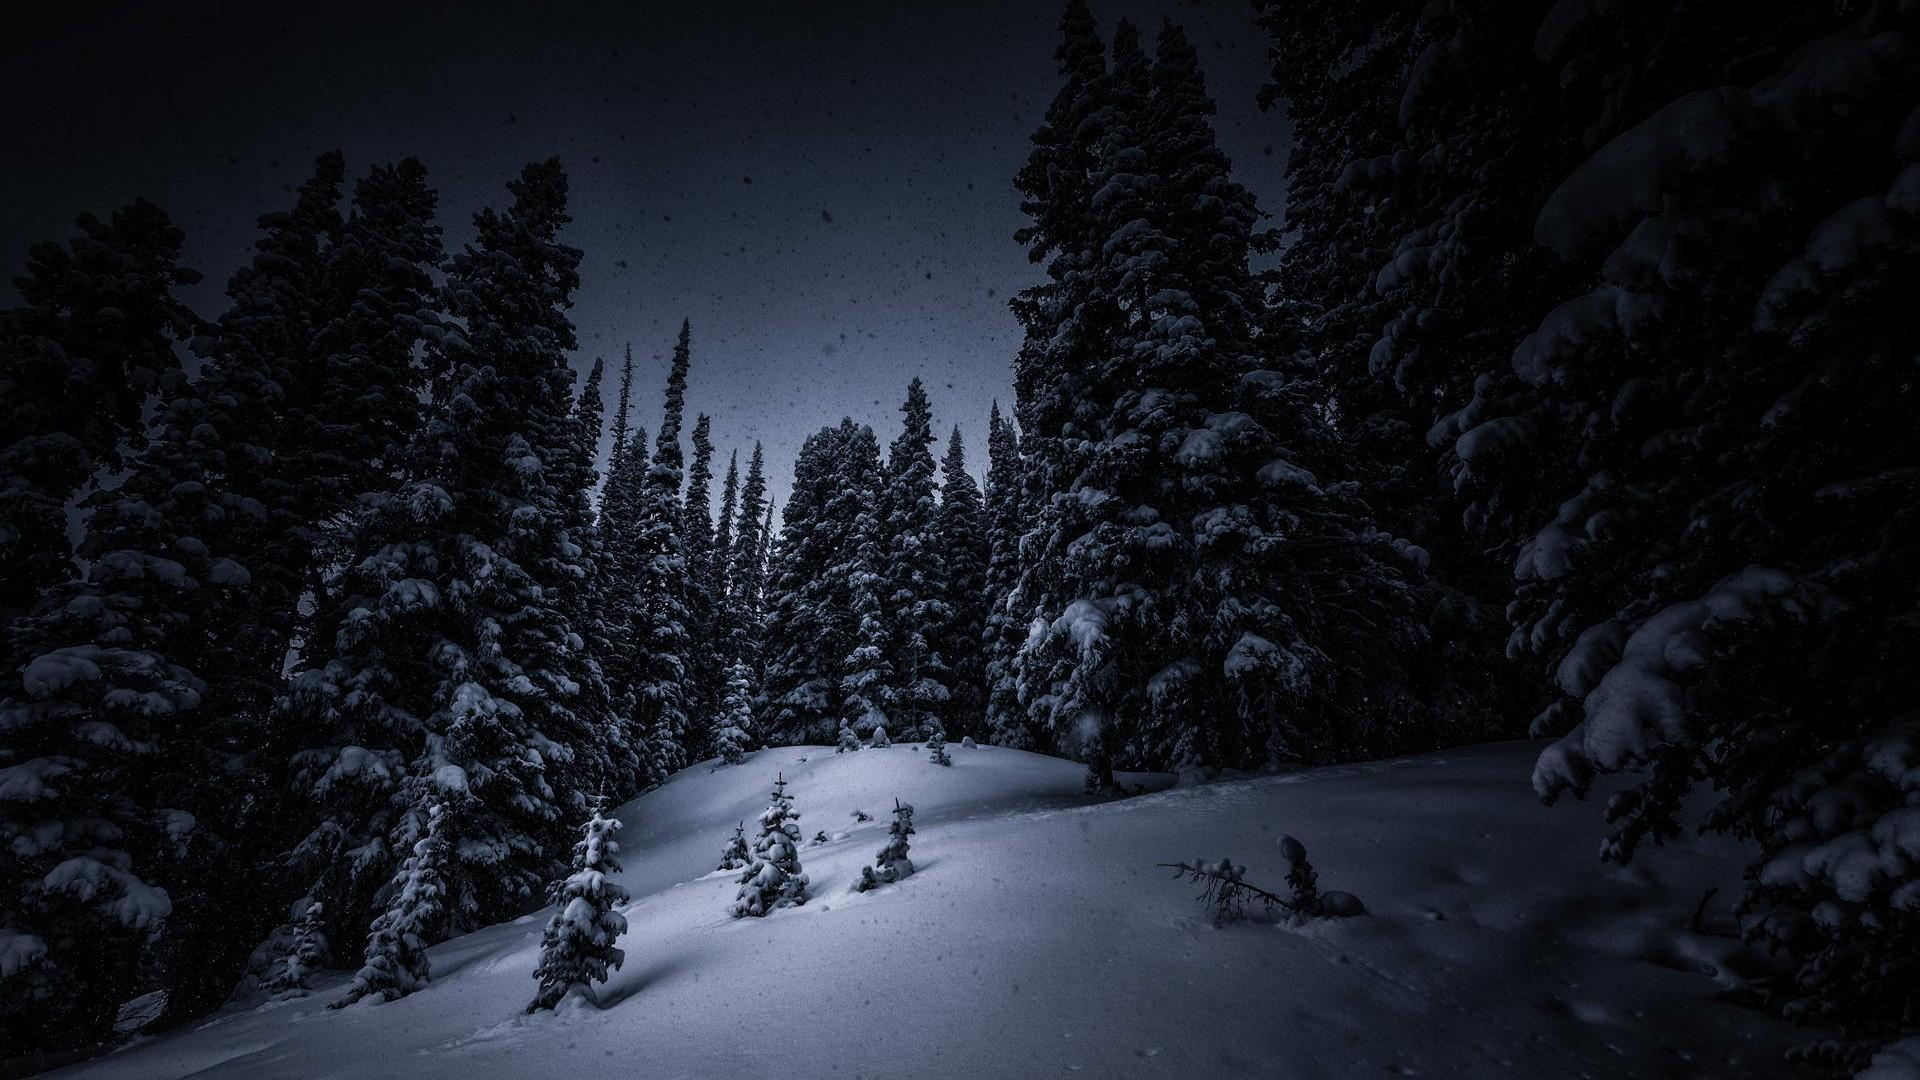 Download Wallpaper snow winter spruce night dark darkness, 1920x Snow in the woods